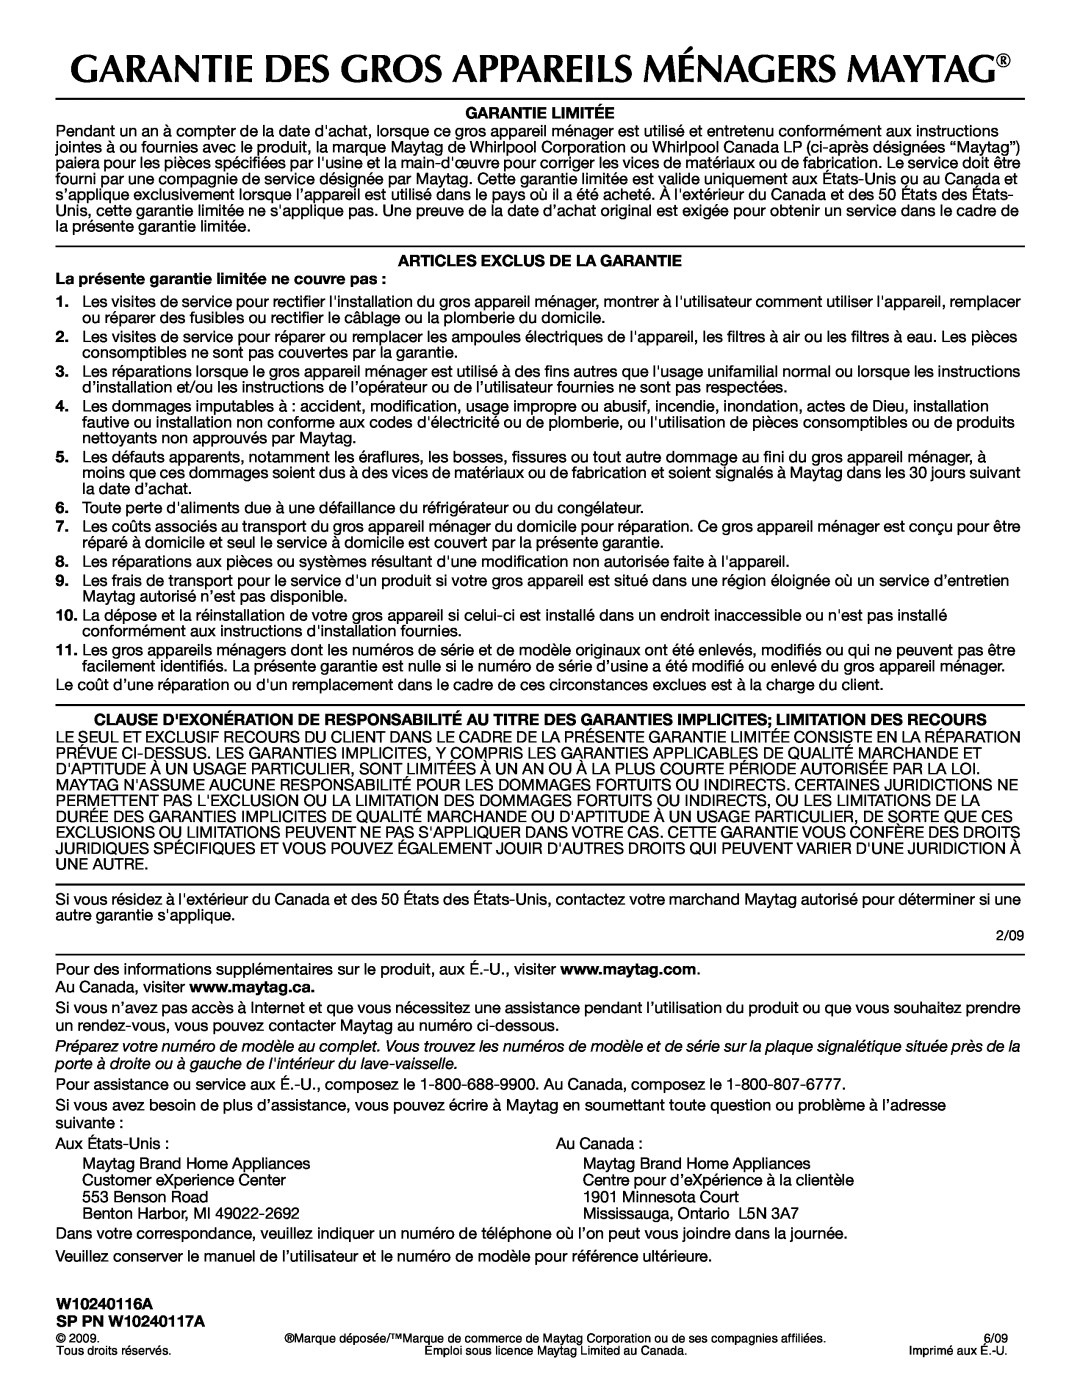 Maytag W10240116A warranty Garantie Des Gros Appareils Ménagers Maytag, Garantie Limitée, Articles Exclus De La Garantie 